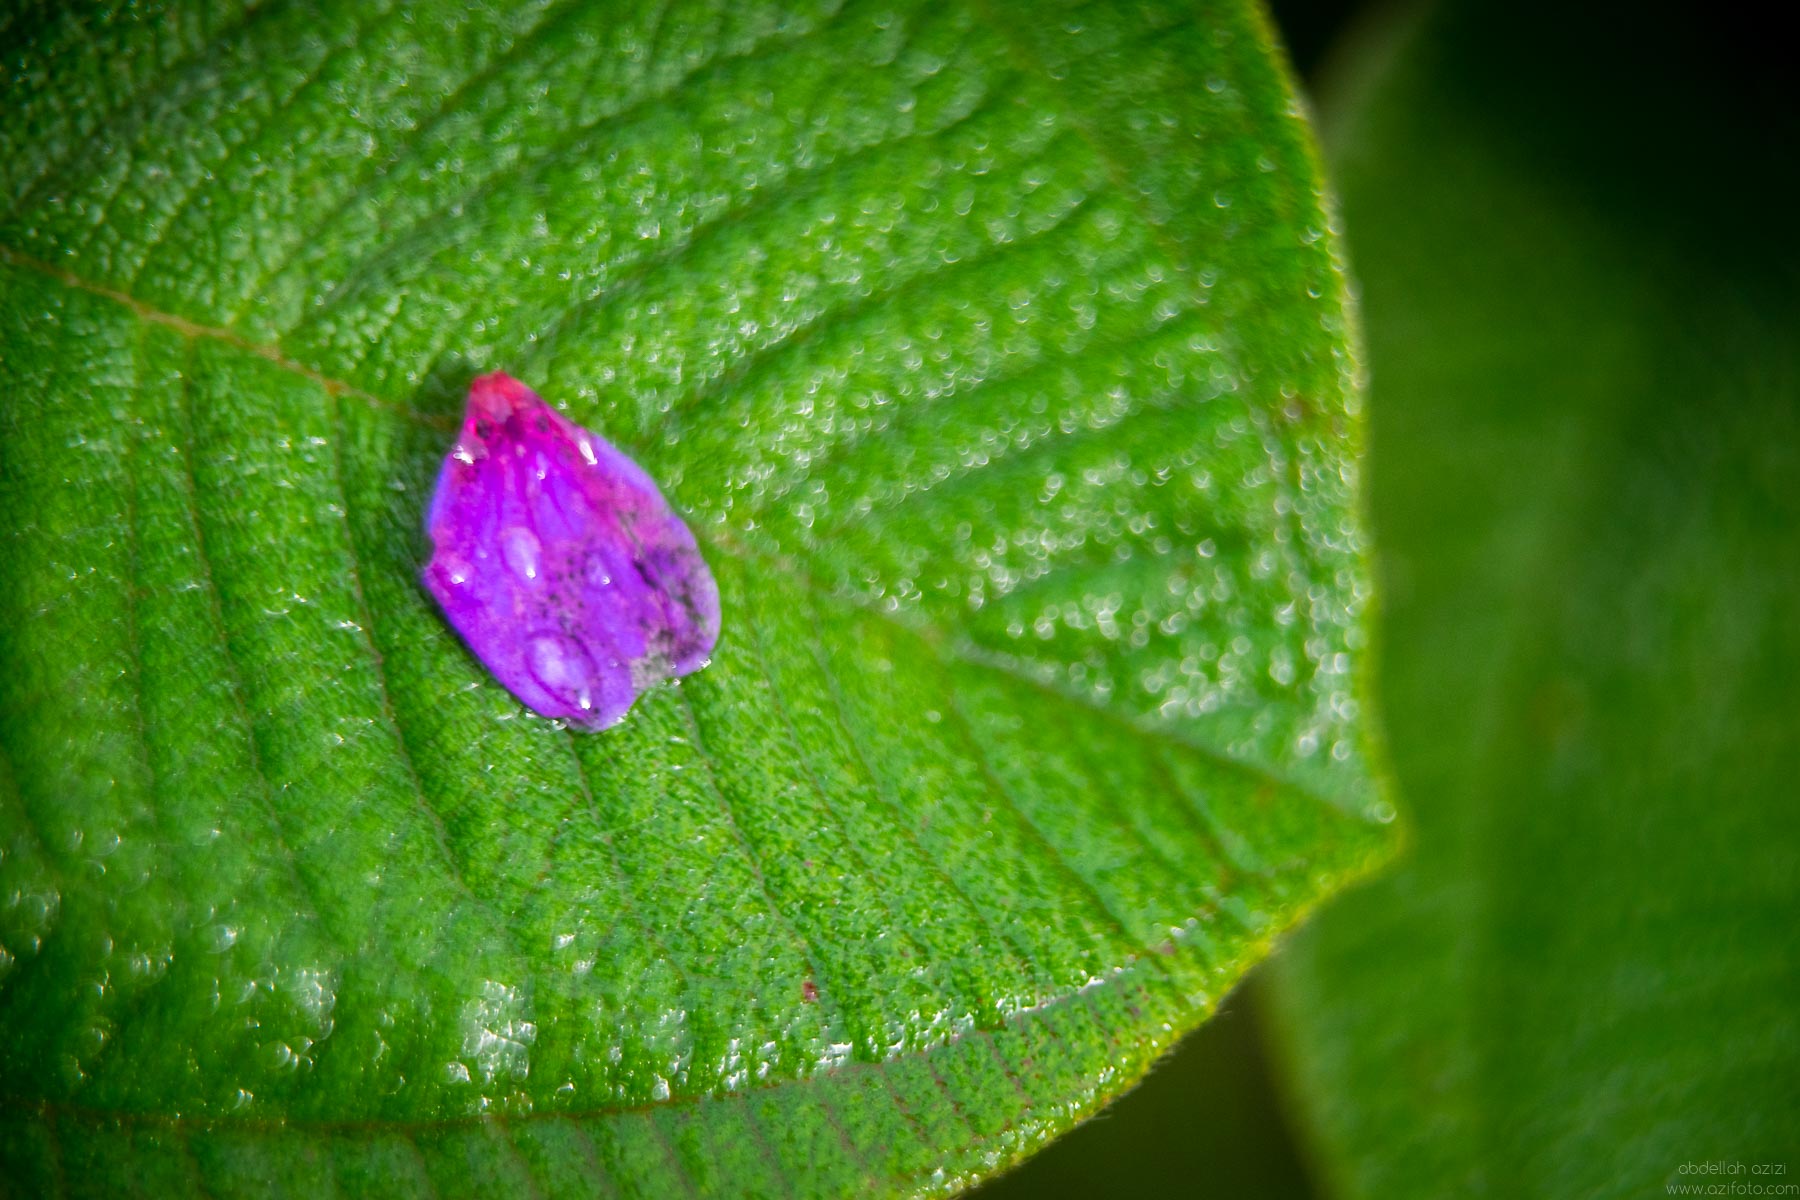 Purpler drop on gree leaf close up